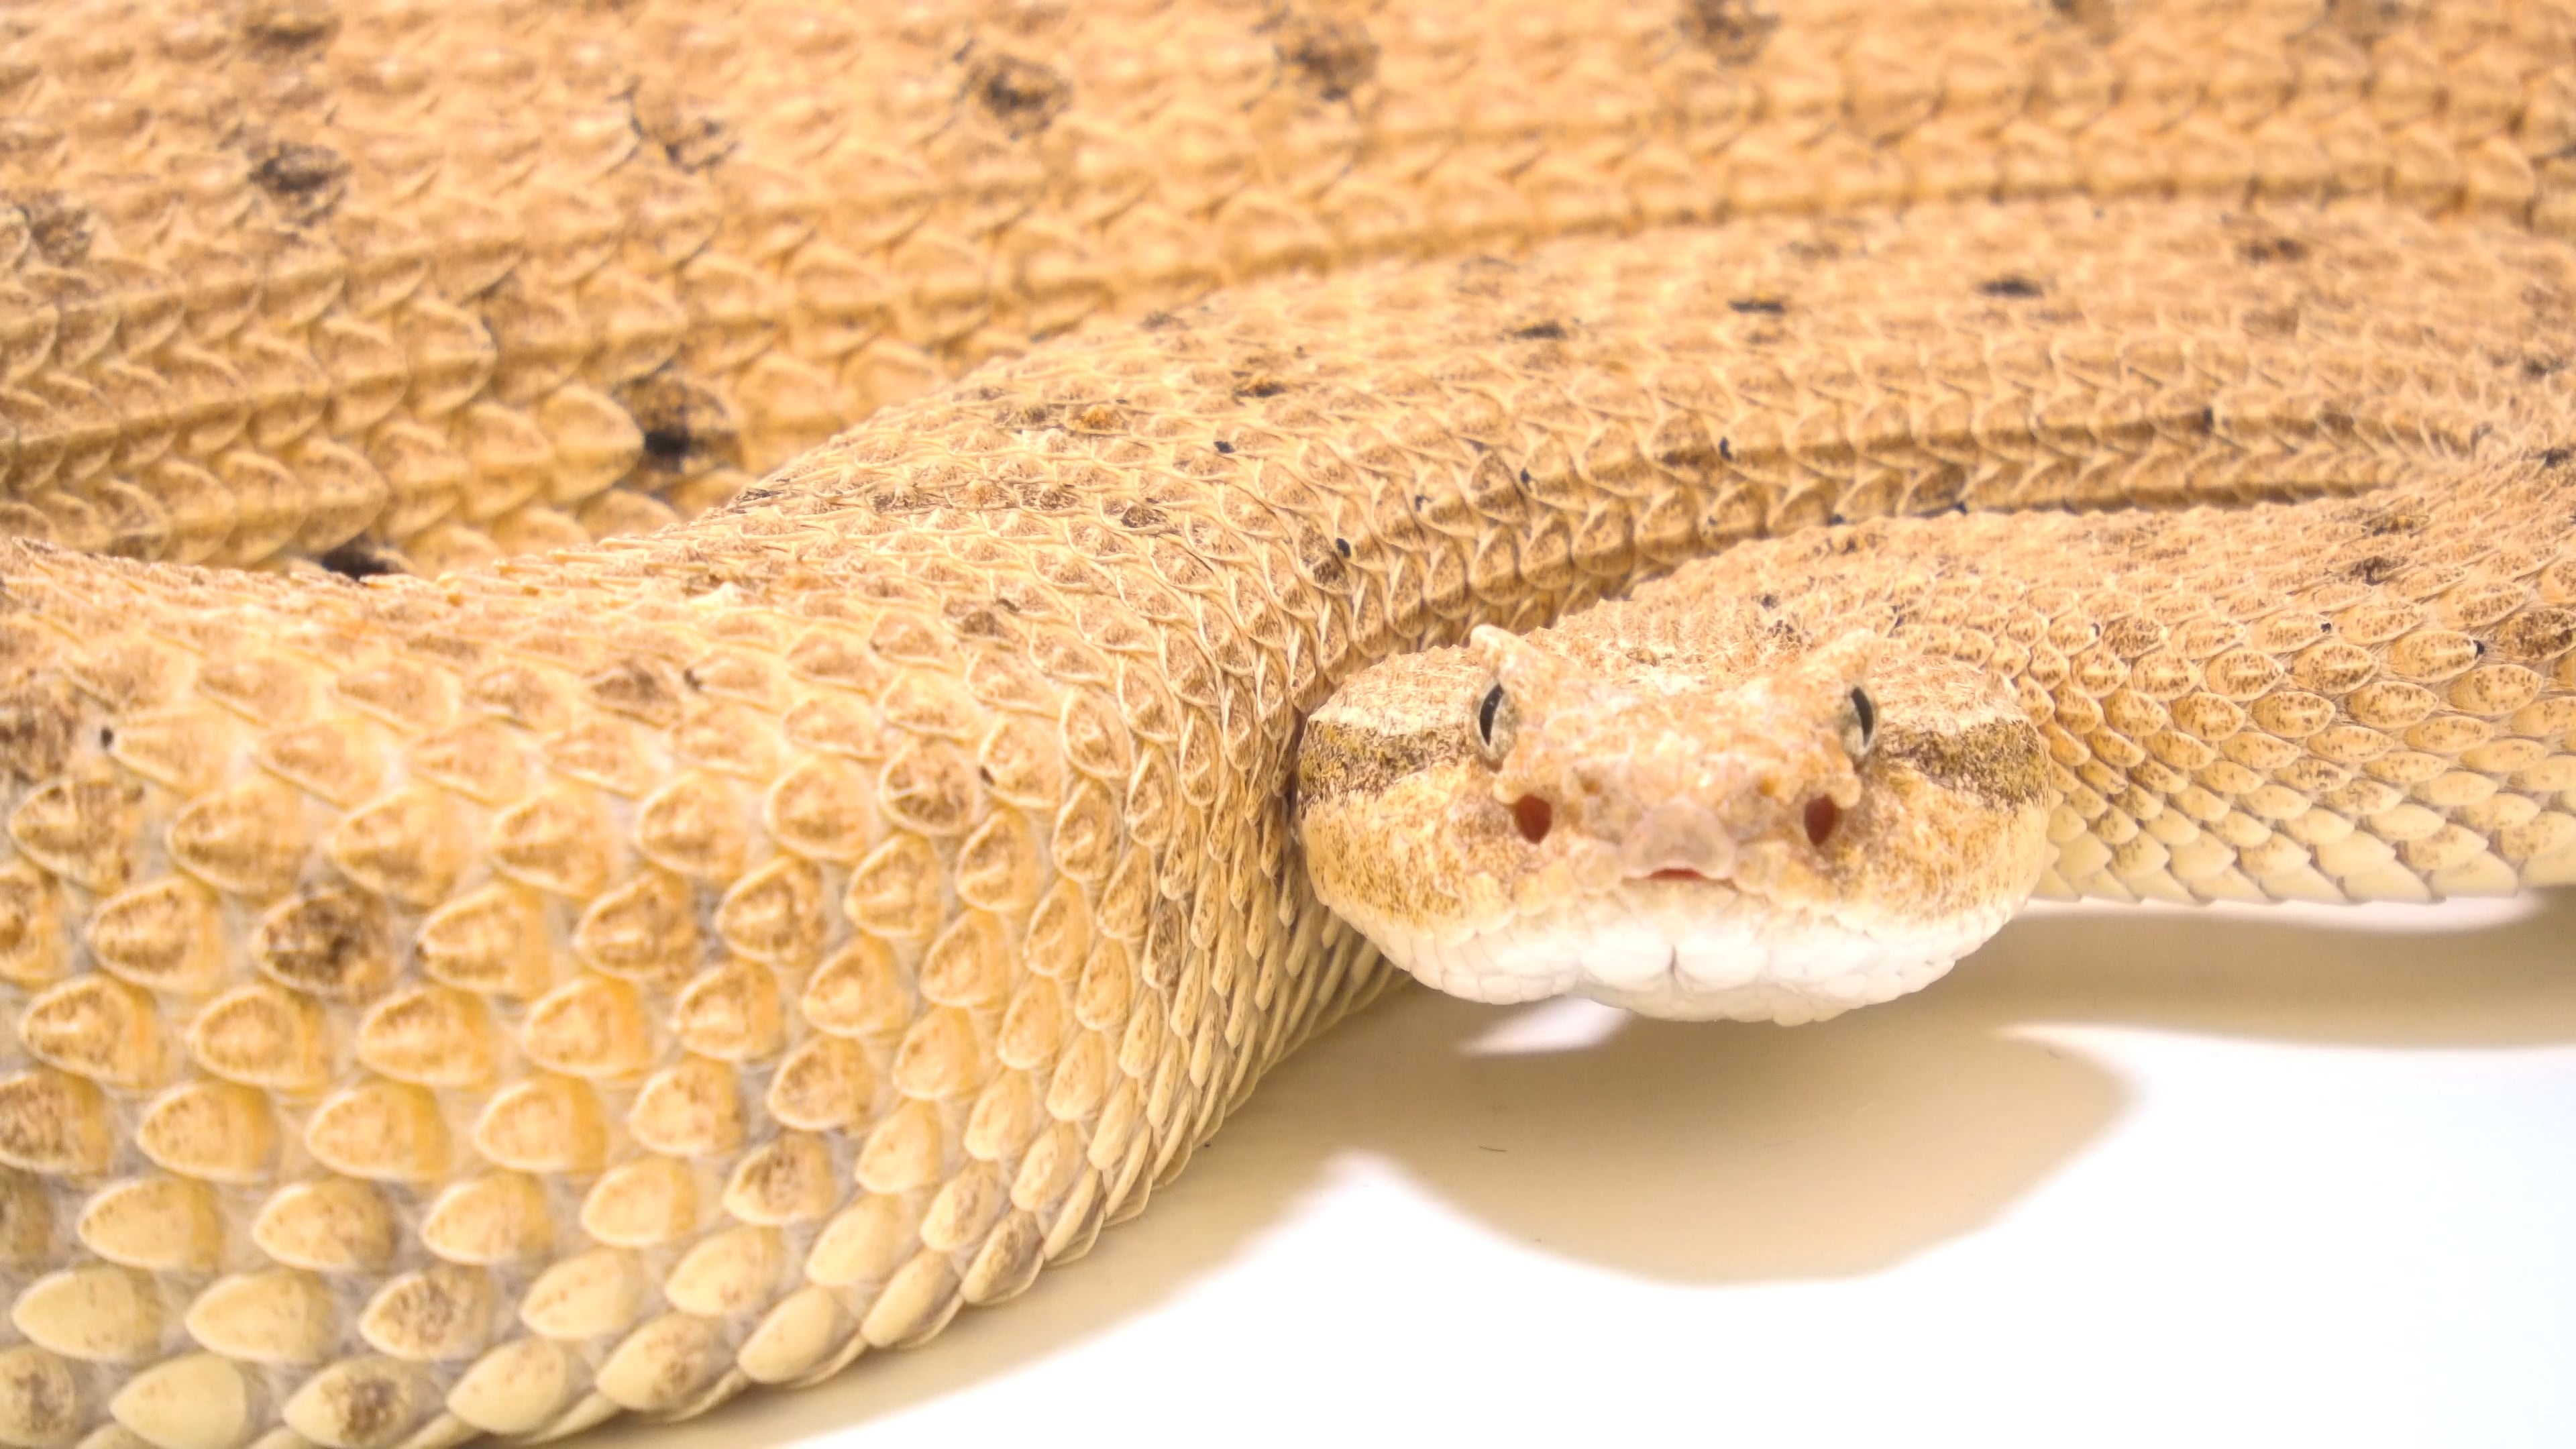 Rattlesnake hiss, Venomous serpent, Wildlife close-up, Joel Sartore photography, 3840x2160 4K Desktop